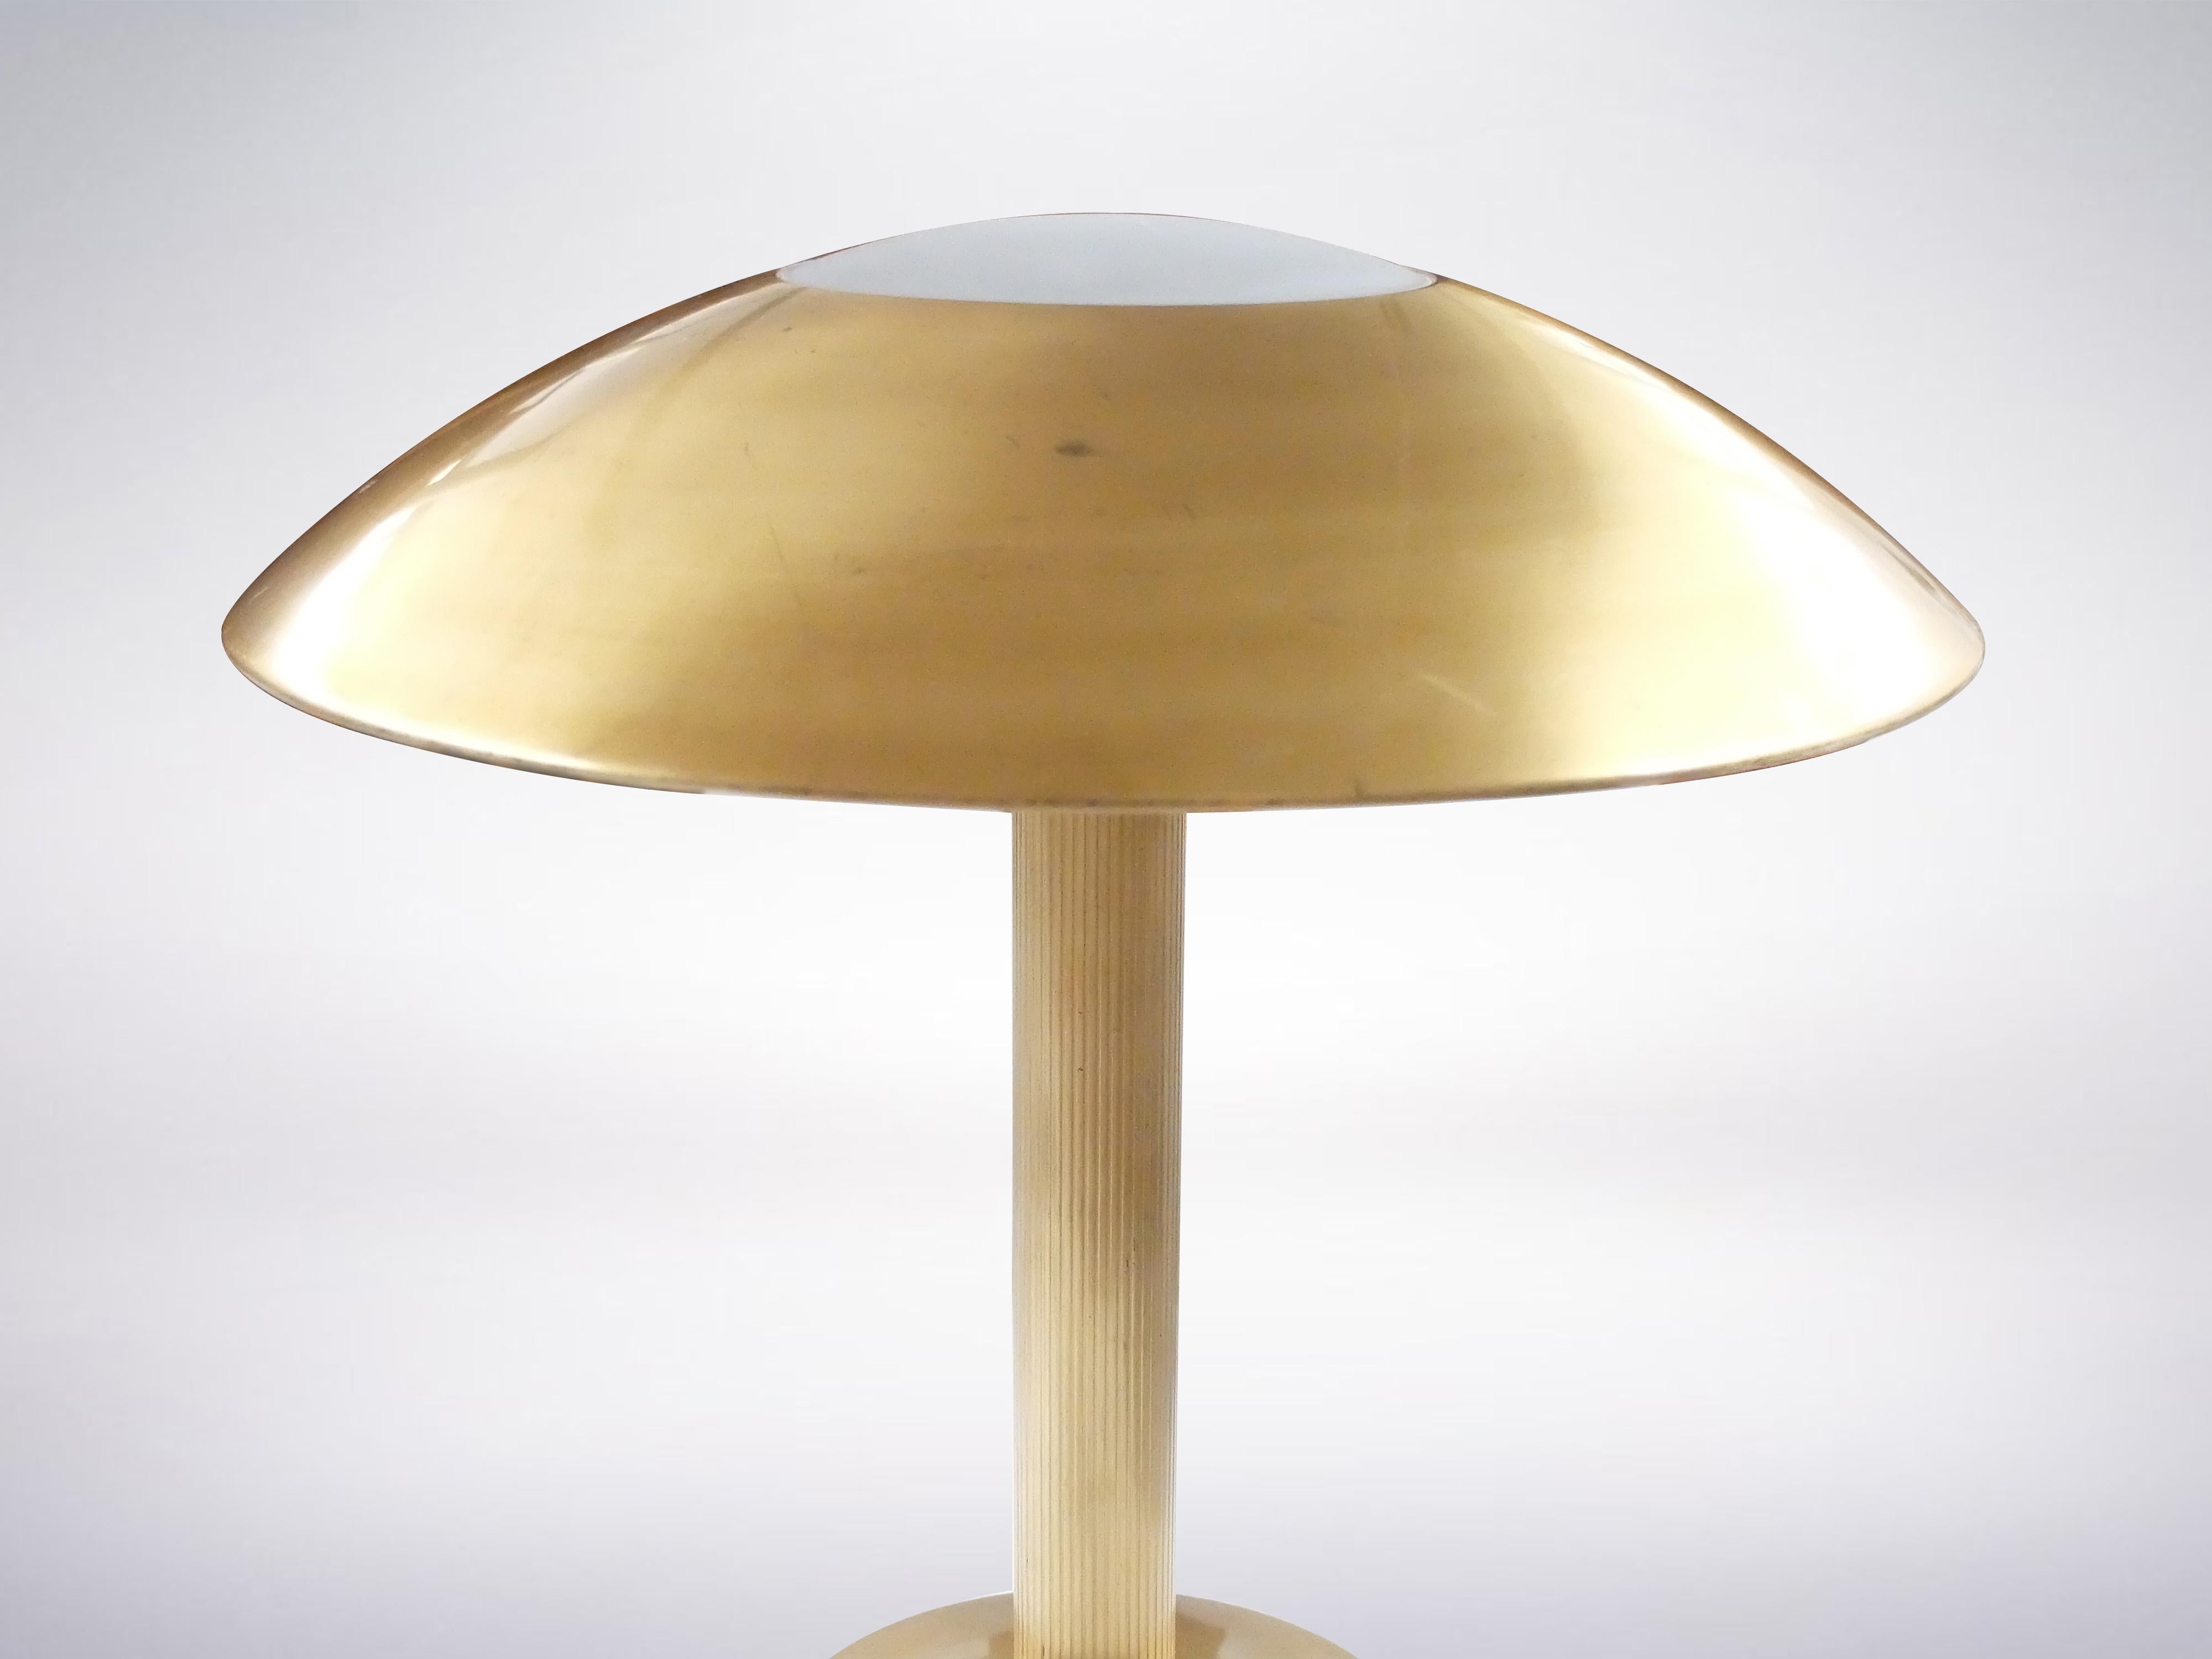 3 light table lamp